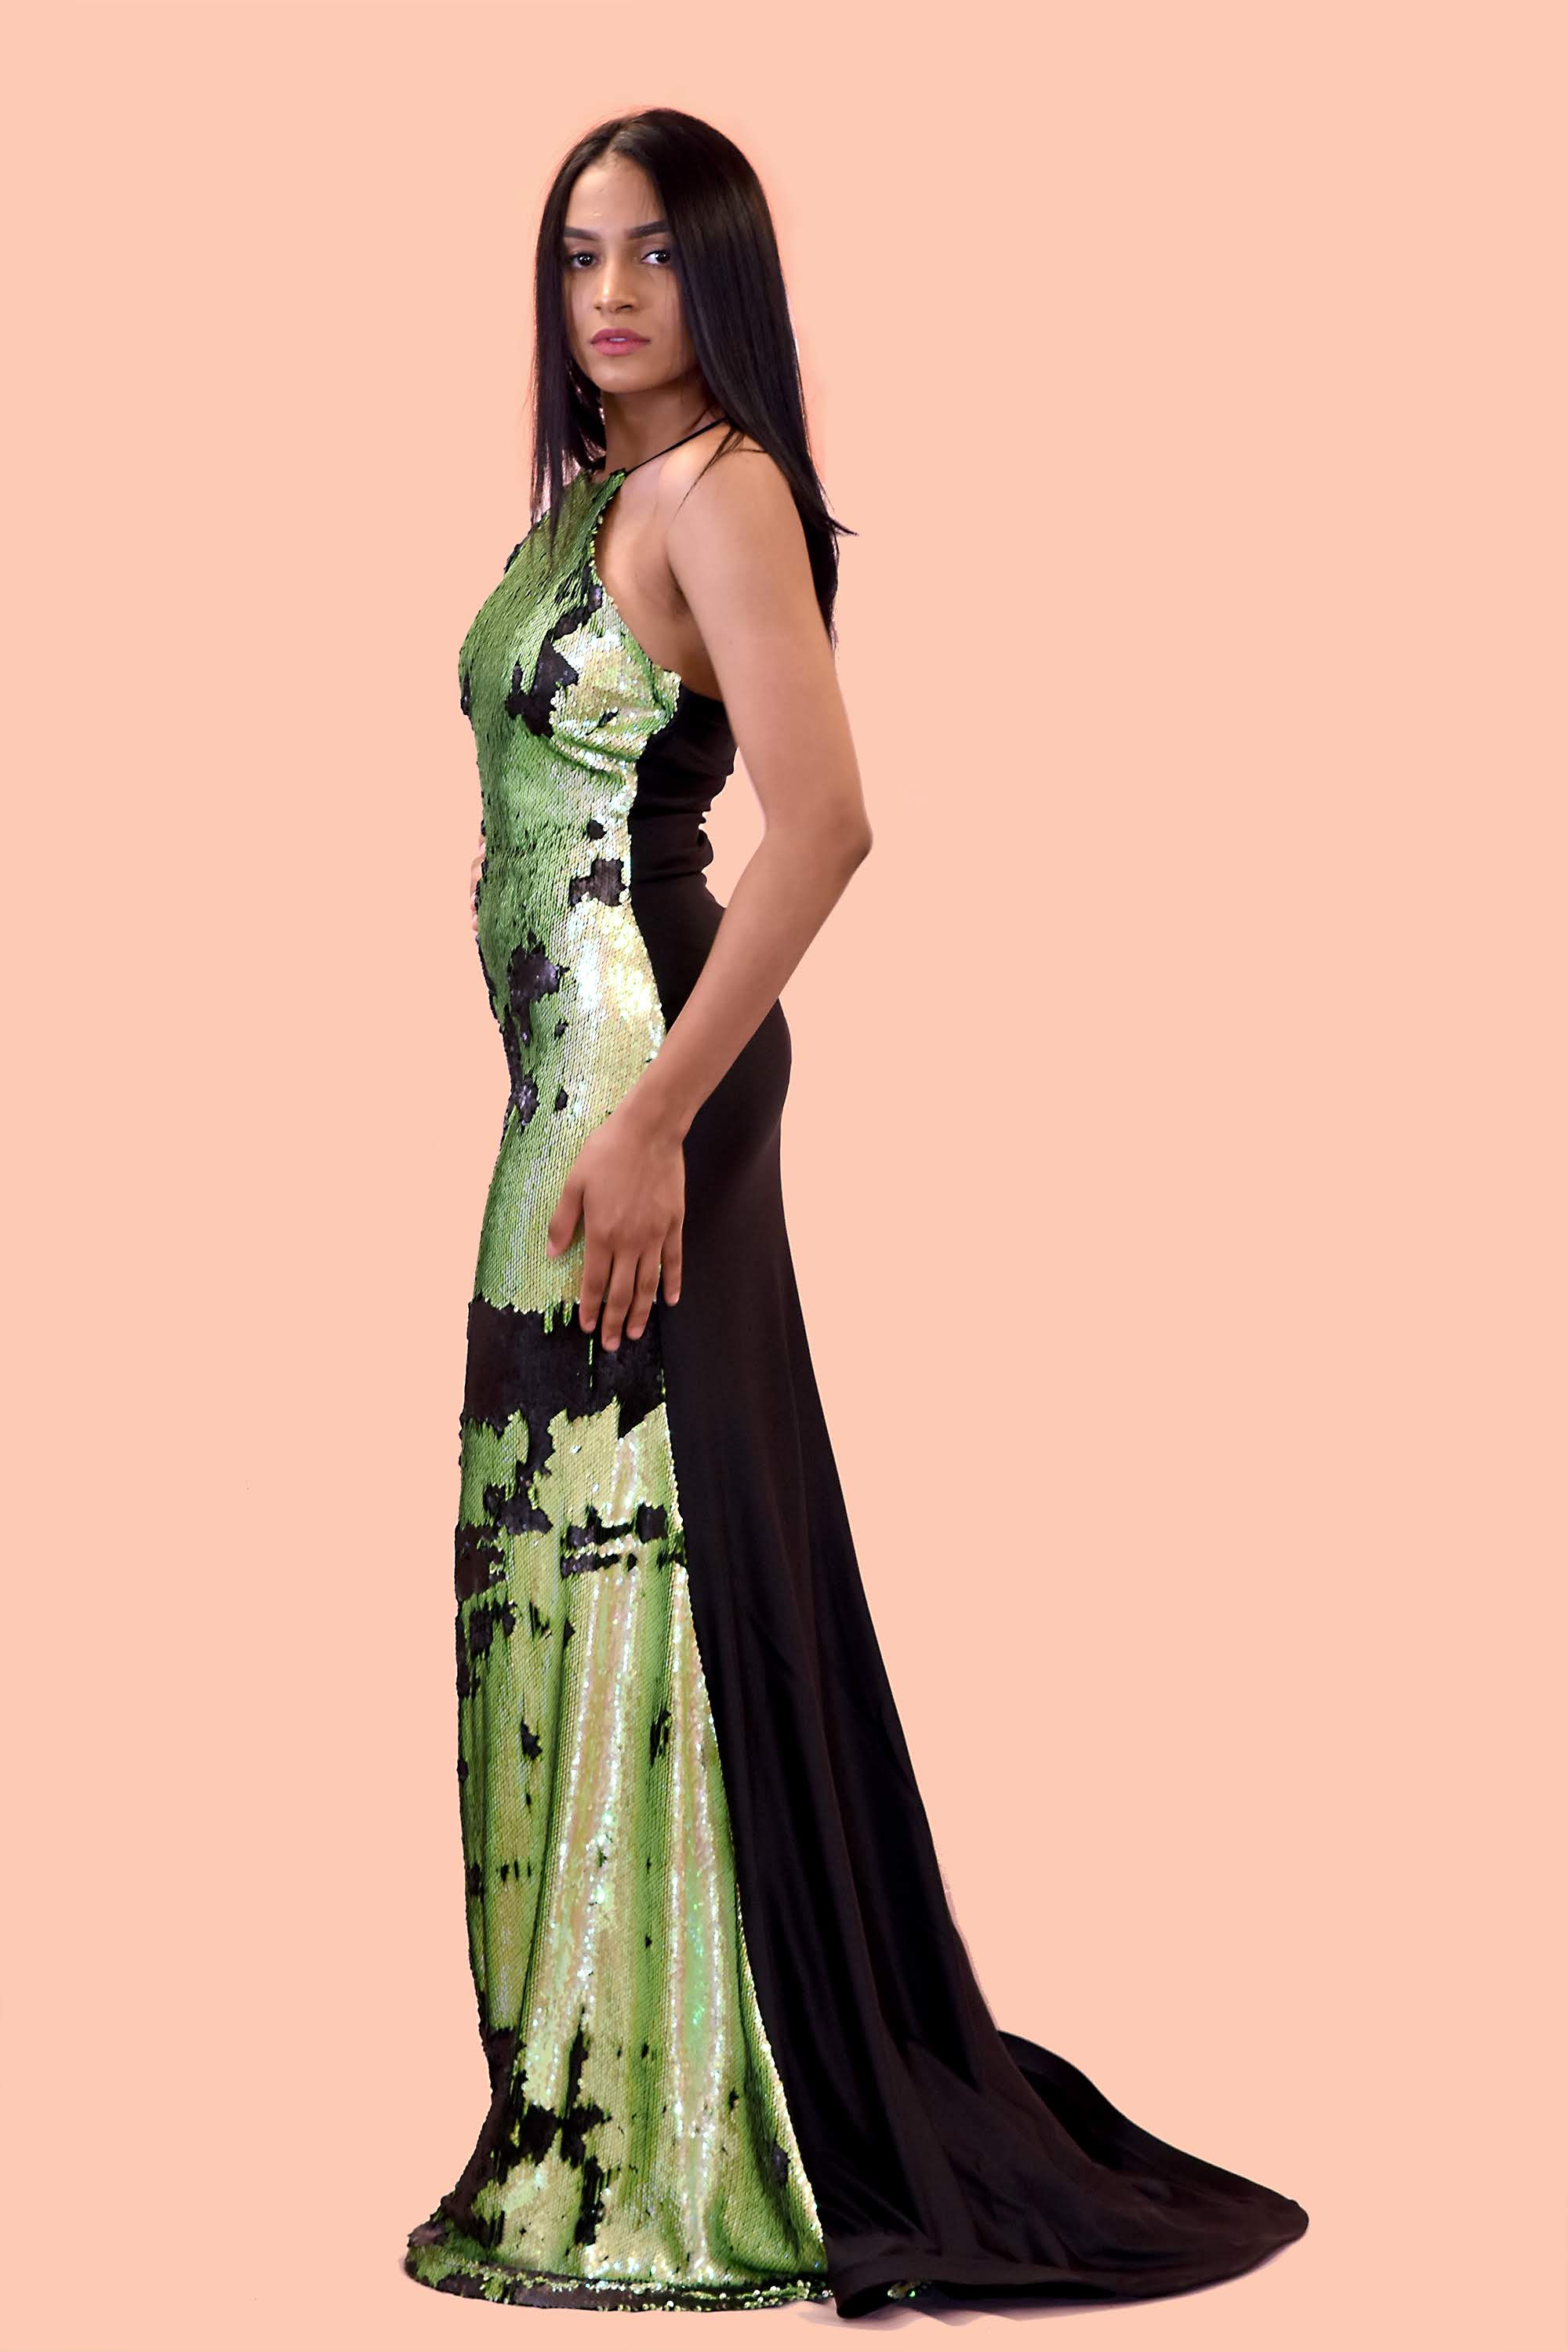 Greensward Sequin Dress